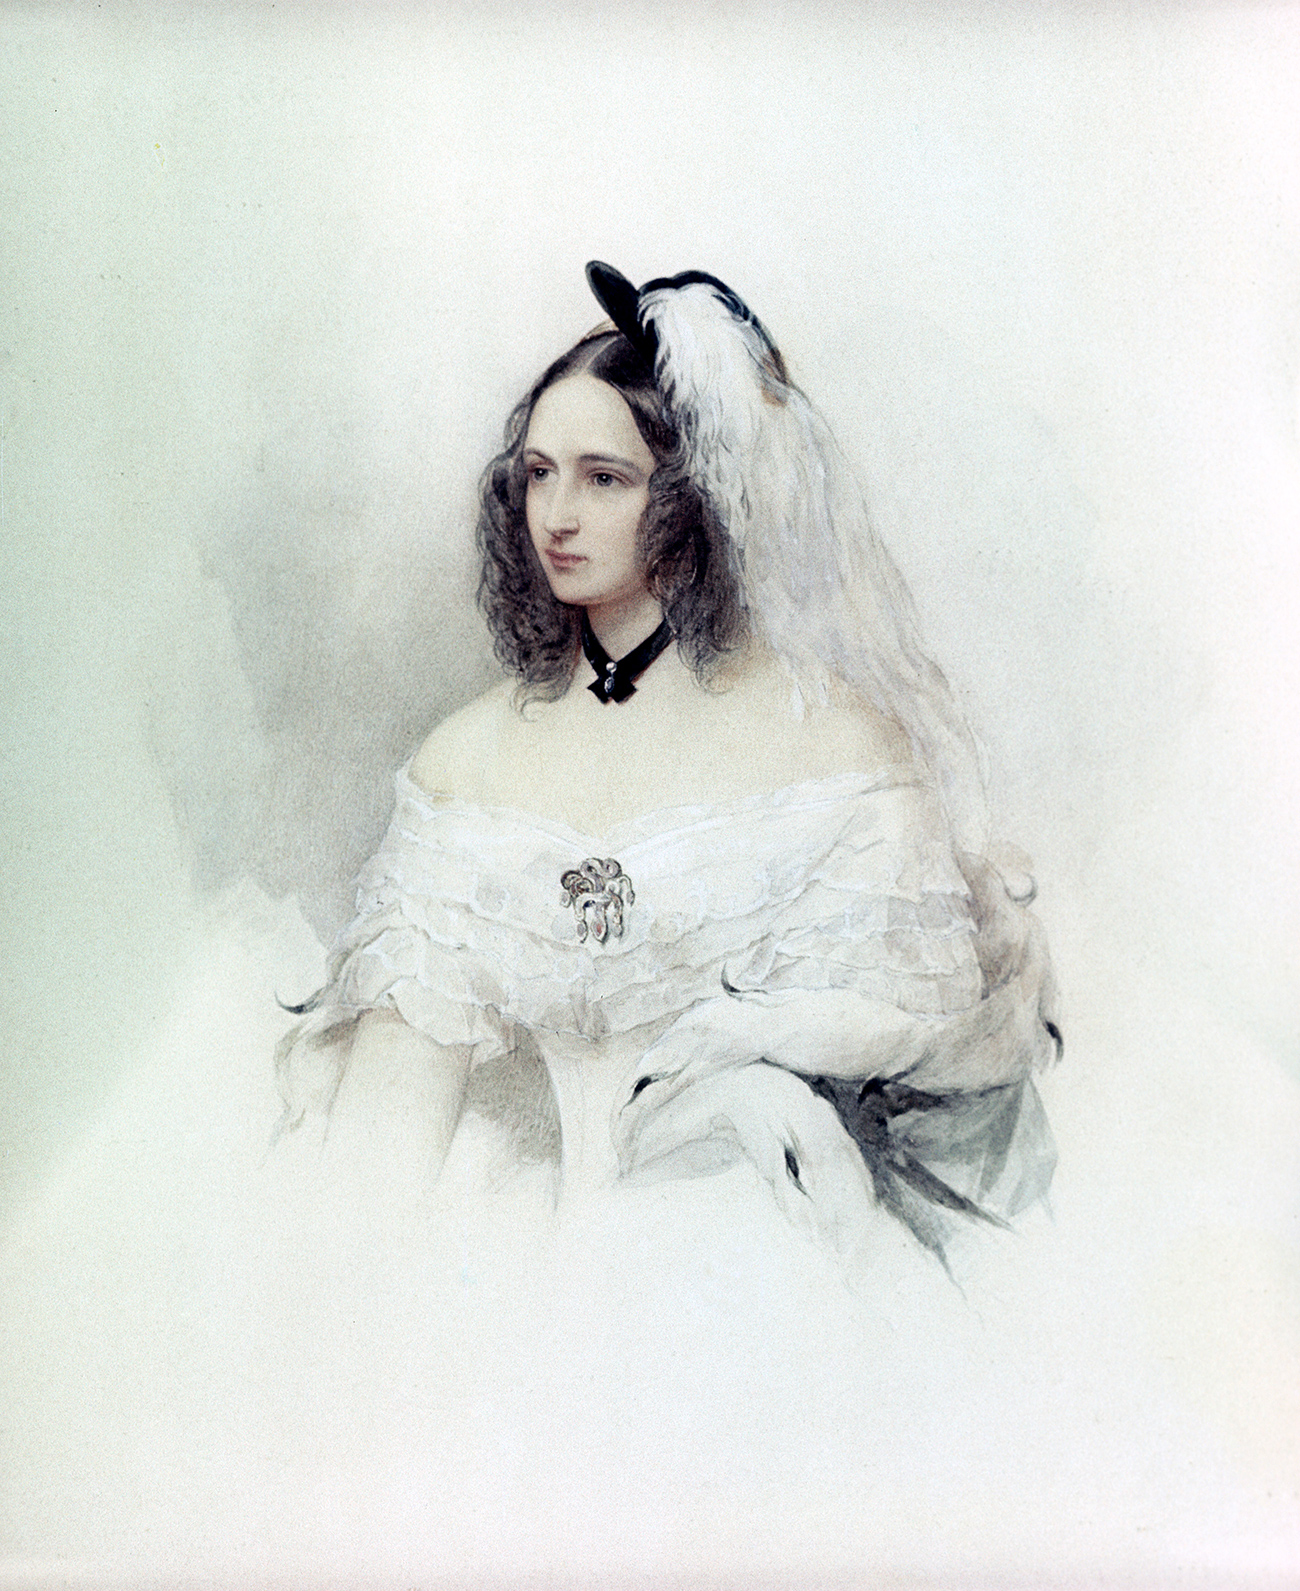 Vladimir Gau (1816-1895). Portrait of Nathalie Pushkina, nee Goncharova (1812-1863). Watercolor on paper. 1843. Central Pushkin Museum at 12 Moika Embankment, St Petersburg. / RIA Novosti